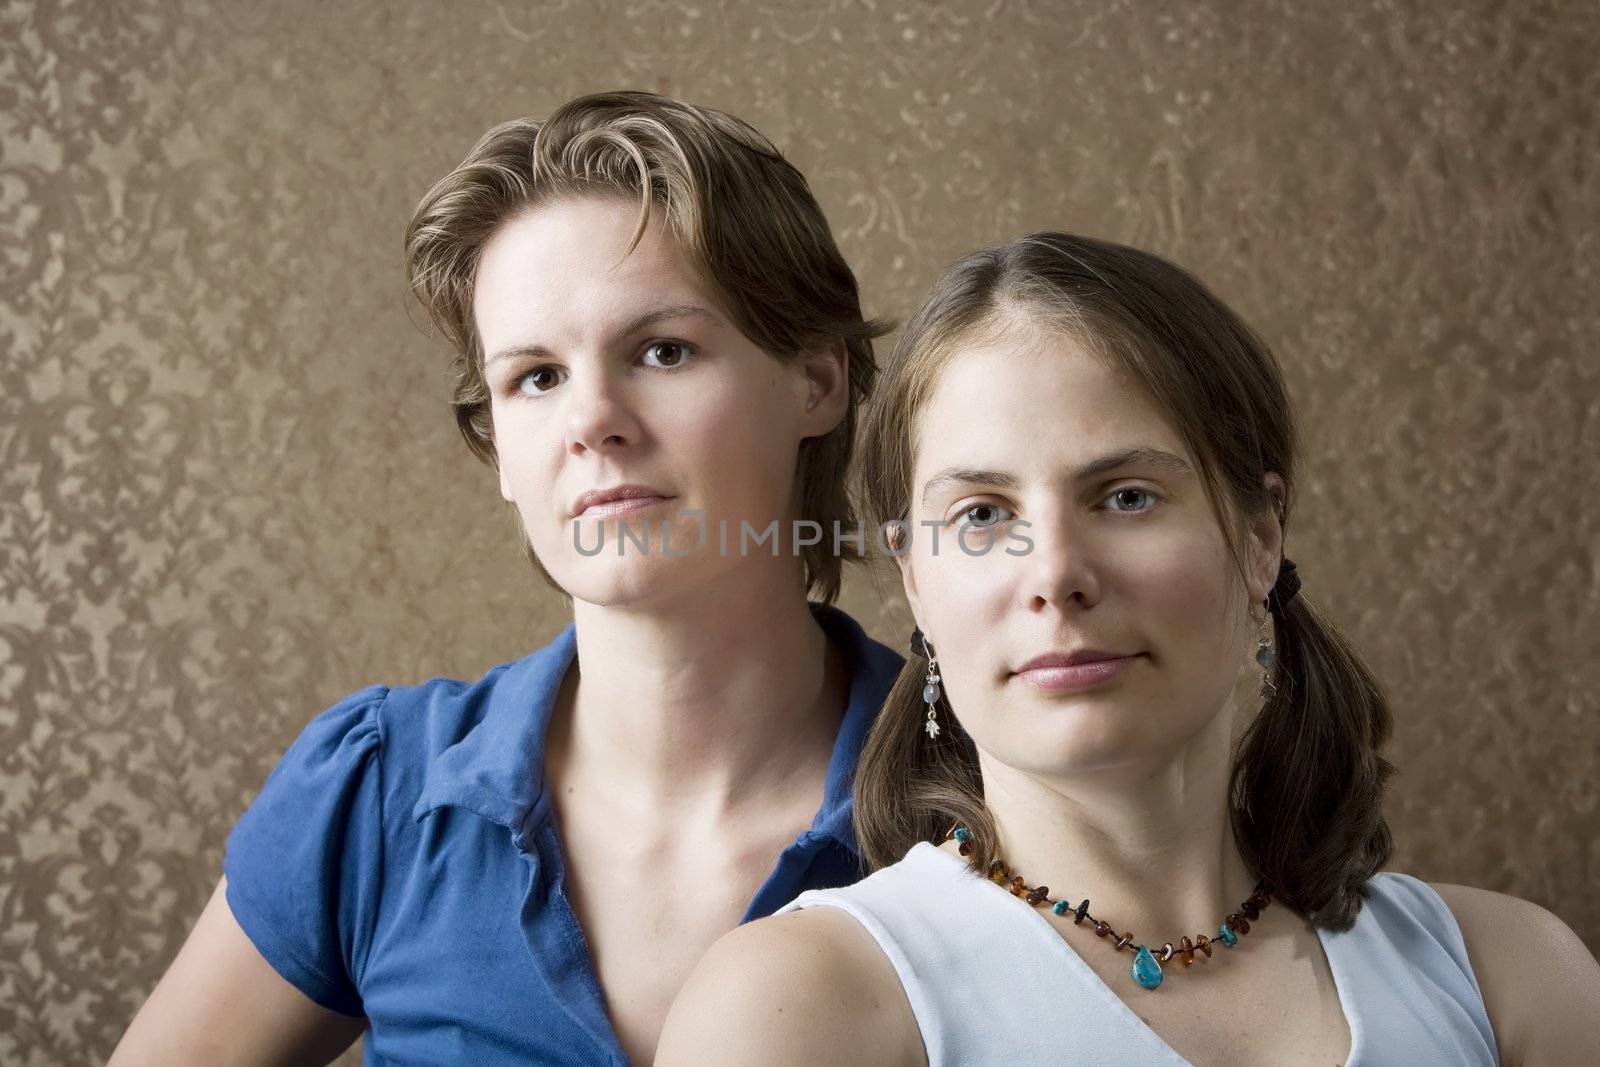 Portrait of Two Pretty Young Women Friends 